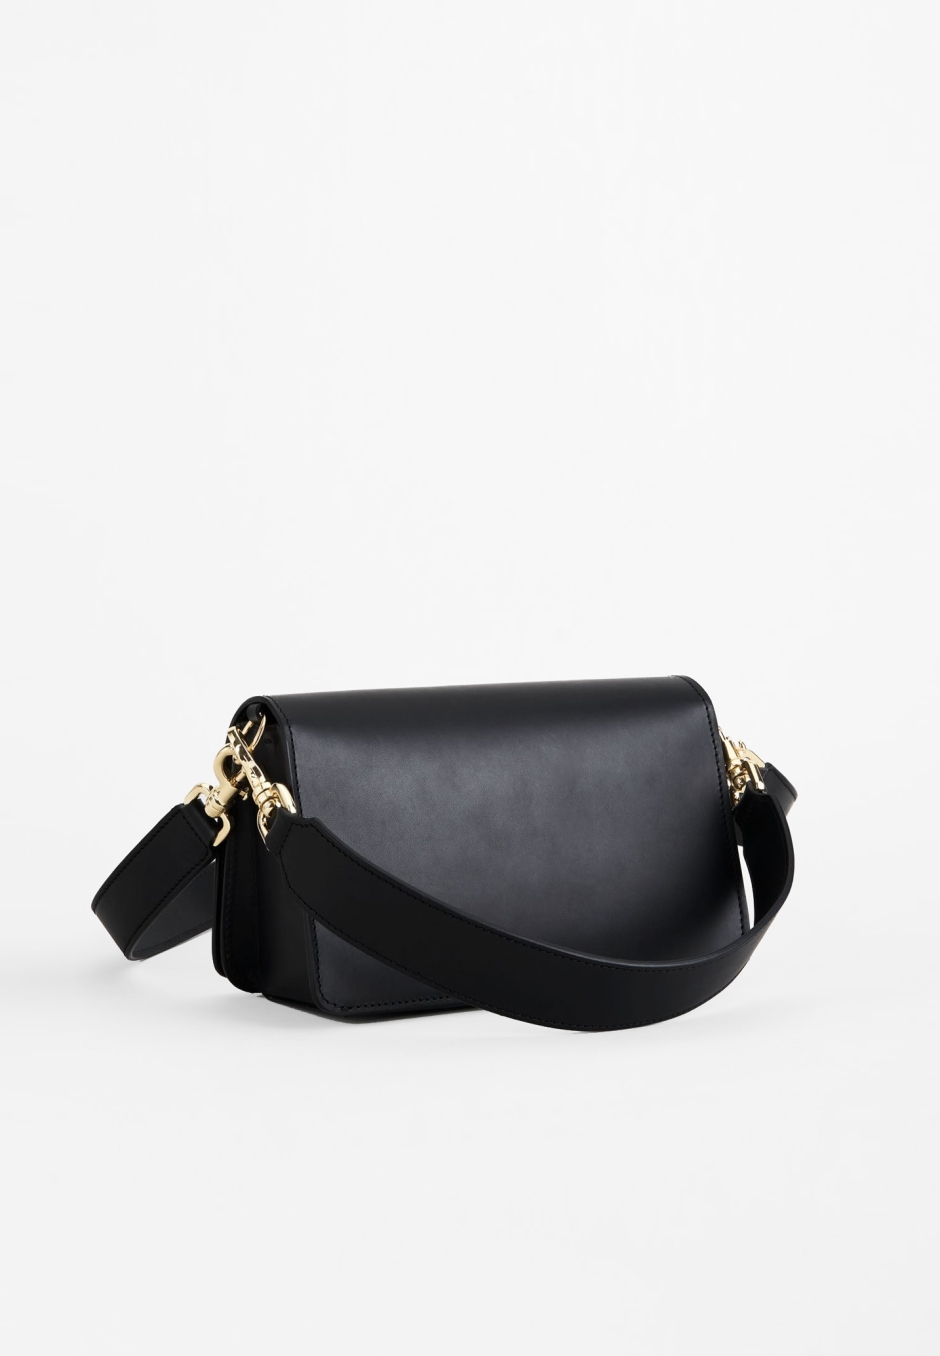 ATP Atelier Assisi Black Leather Baguette Bag